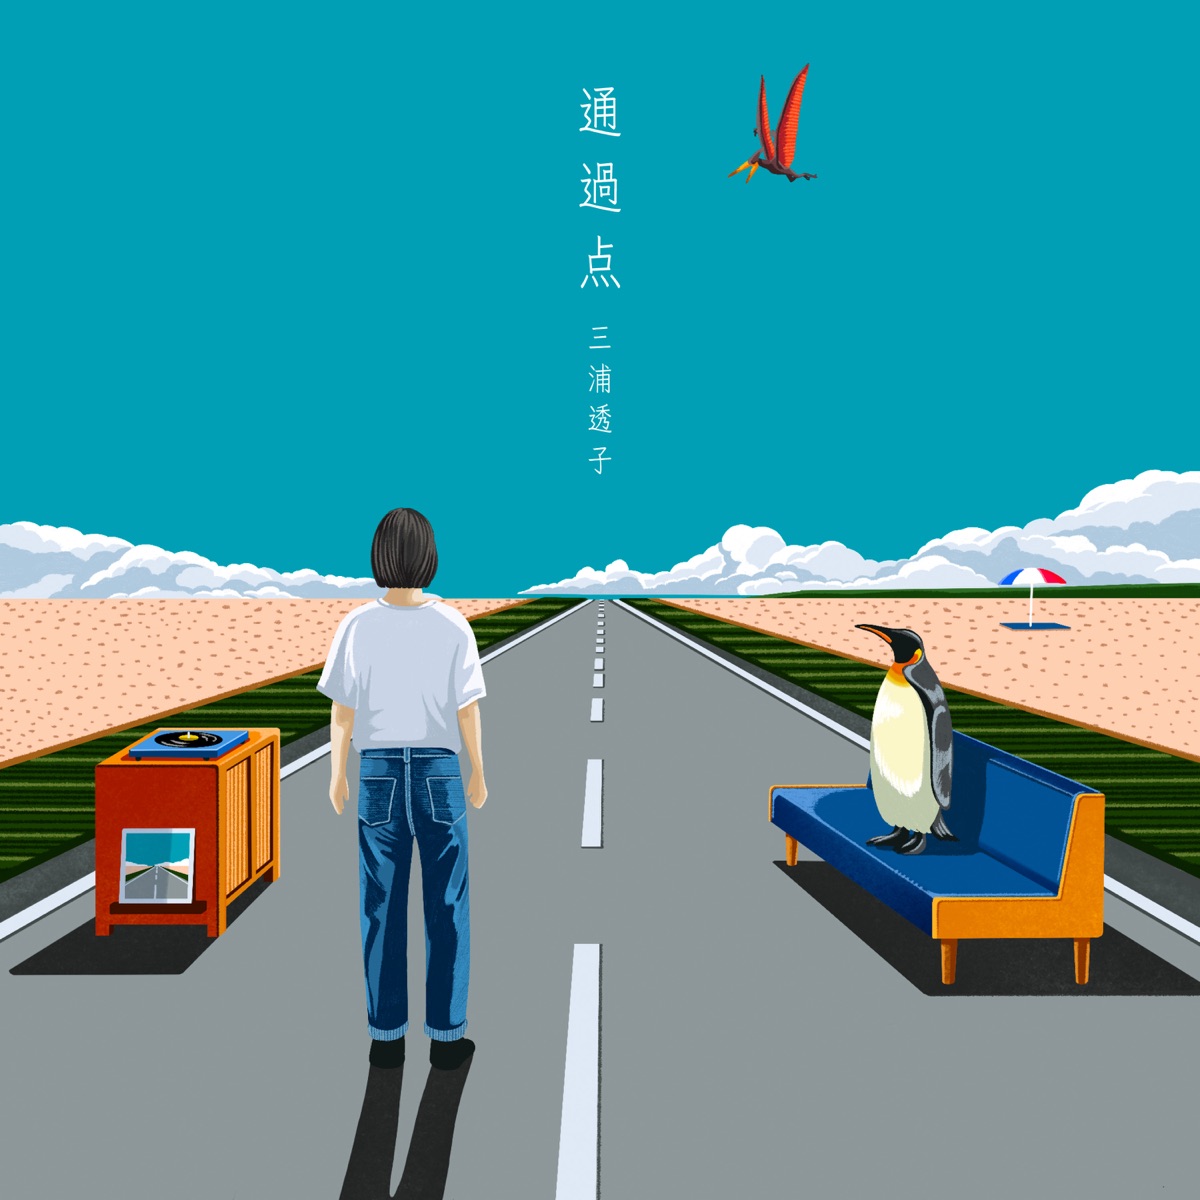 Cover art for『Toko Miura - 通過点』from the release『Tsuukaten